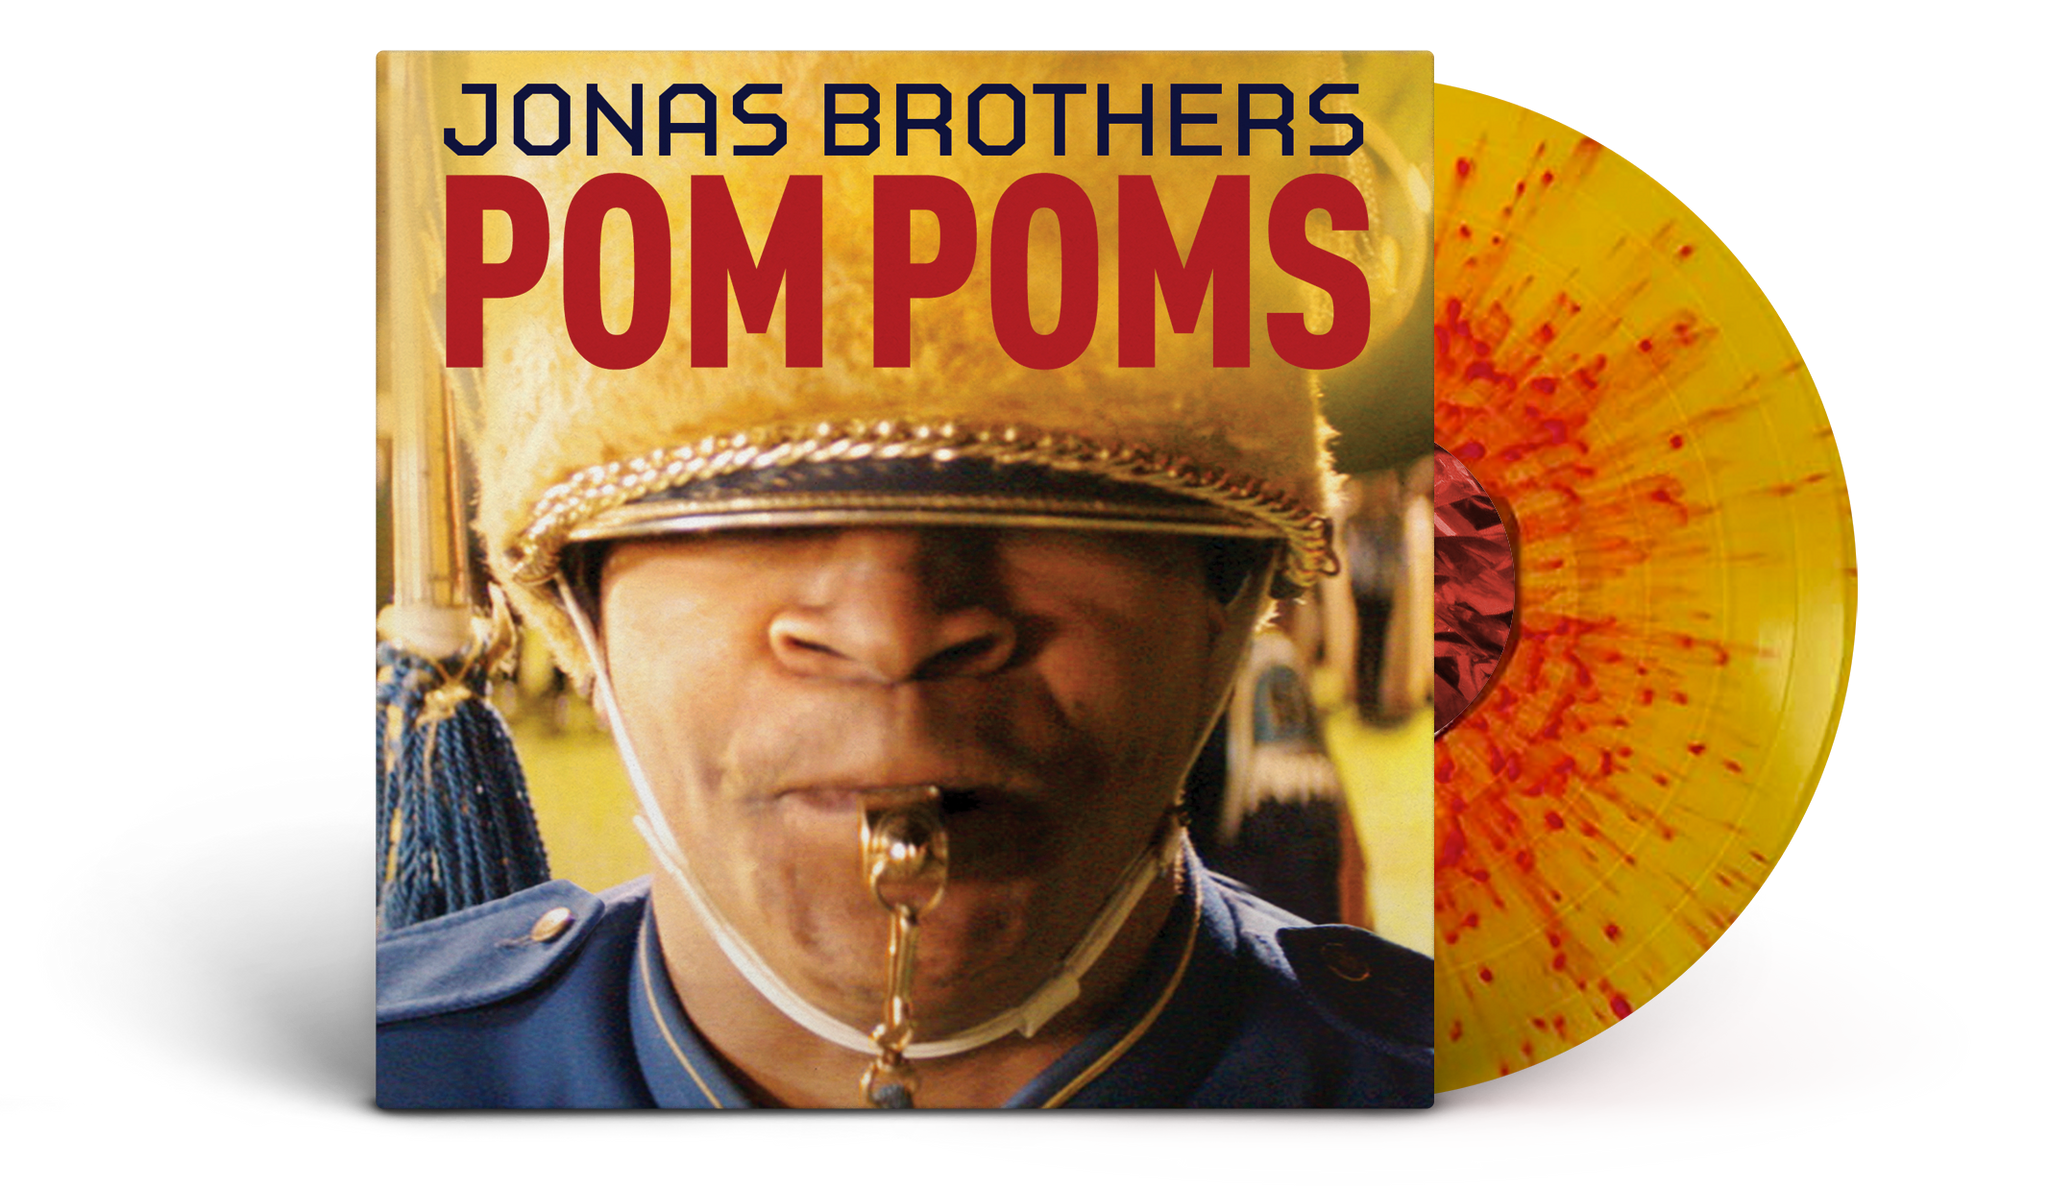 HOLIDAY BUNDLE: Jonas Brothers "V" LP (clear vinyl) + Pom Poms (yellow & red splatter vinyl) 10 inch single!